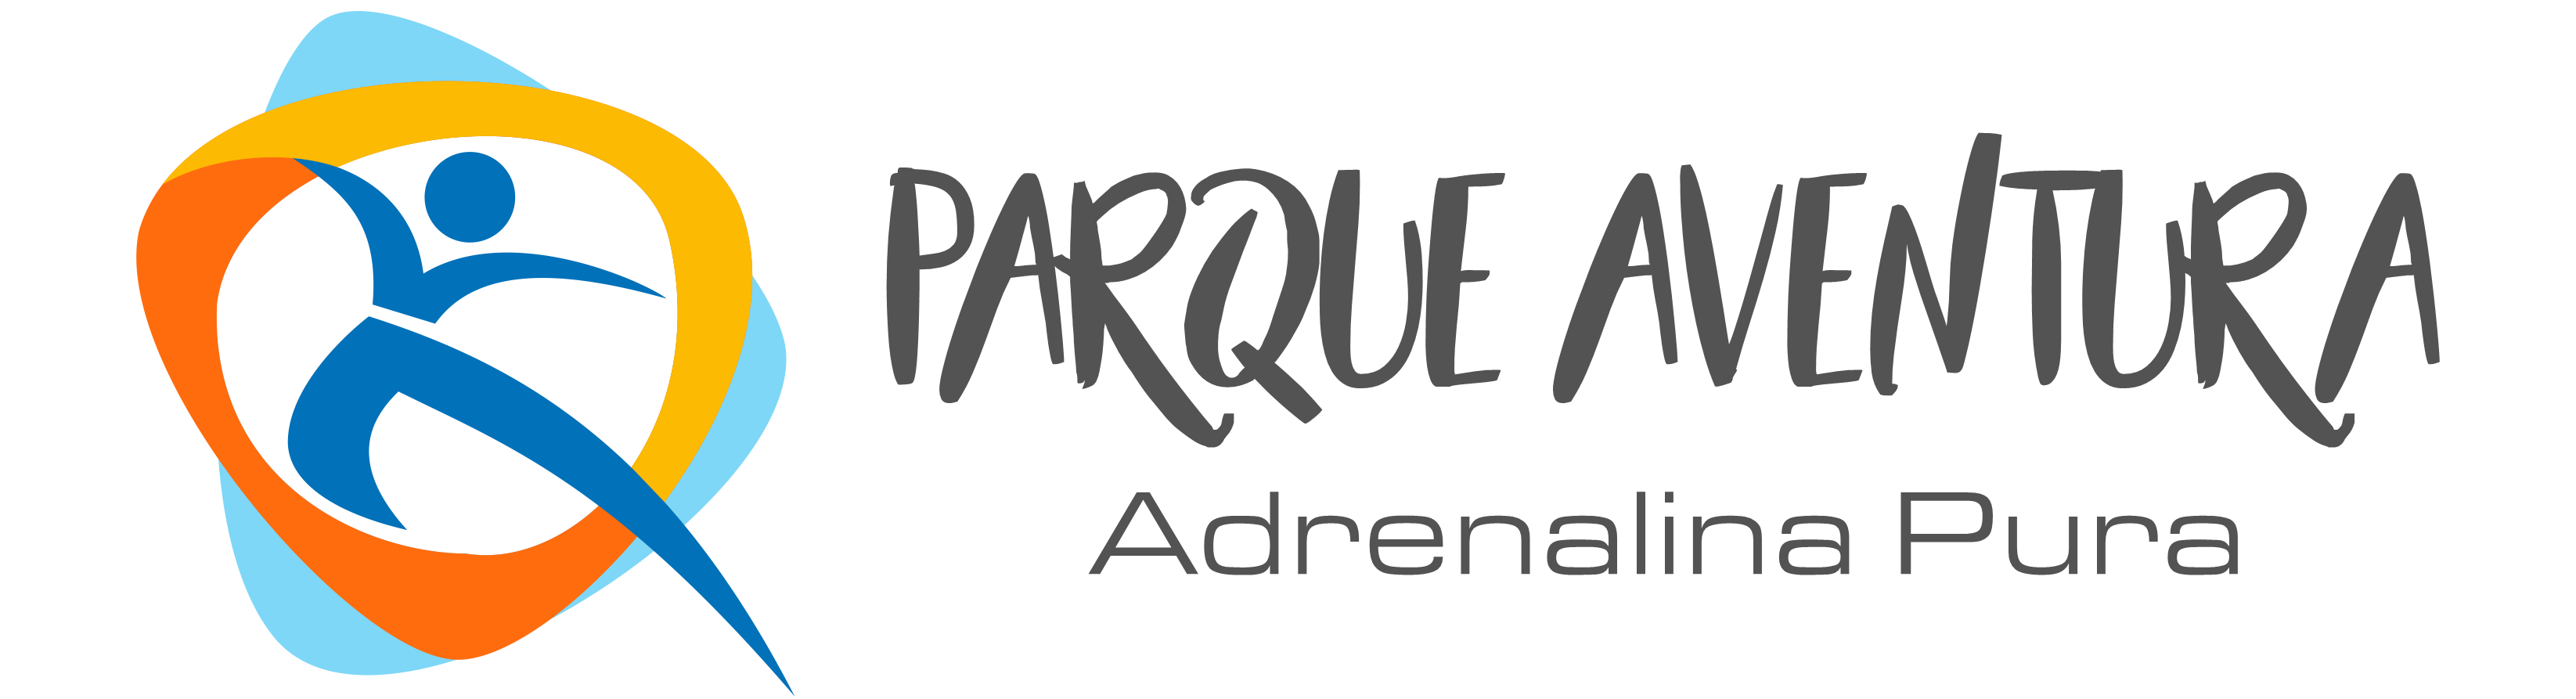 Parque Aventura Pasto - Adrenalina Pura